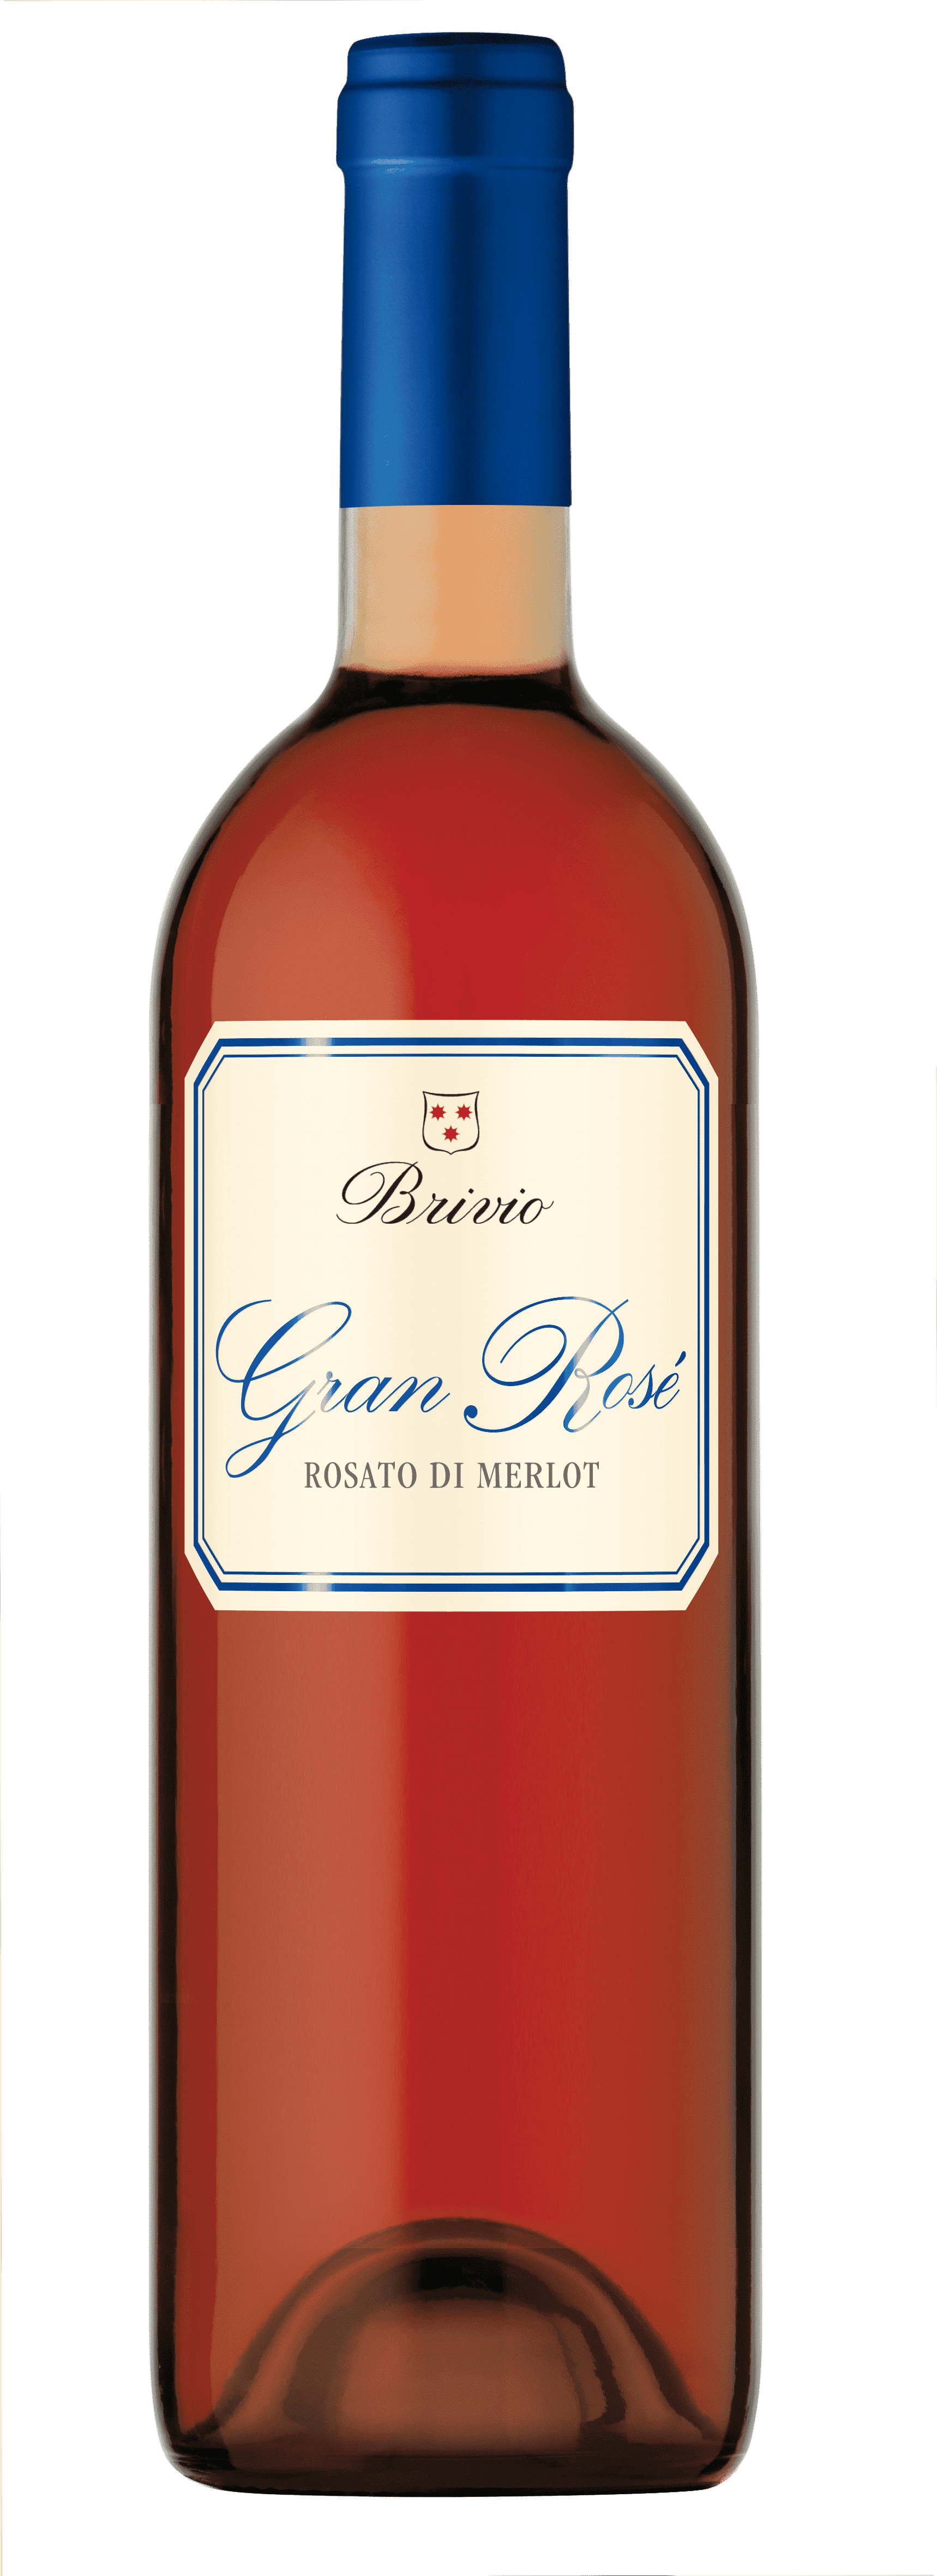 Gran Rosé - Rosato di Merlot - 2019 - Brivio